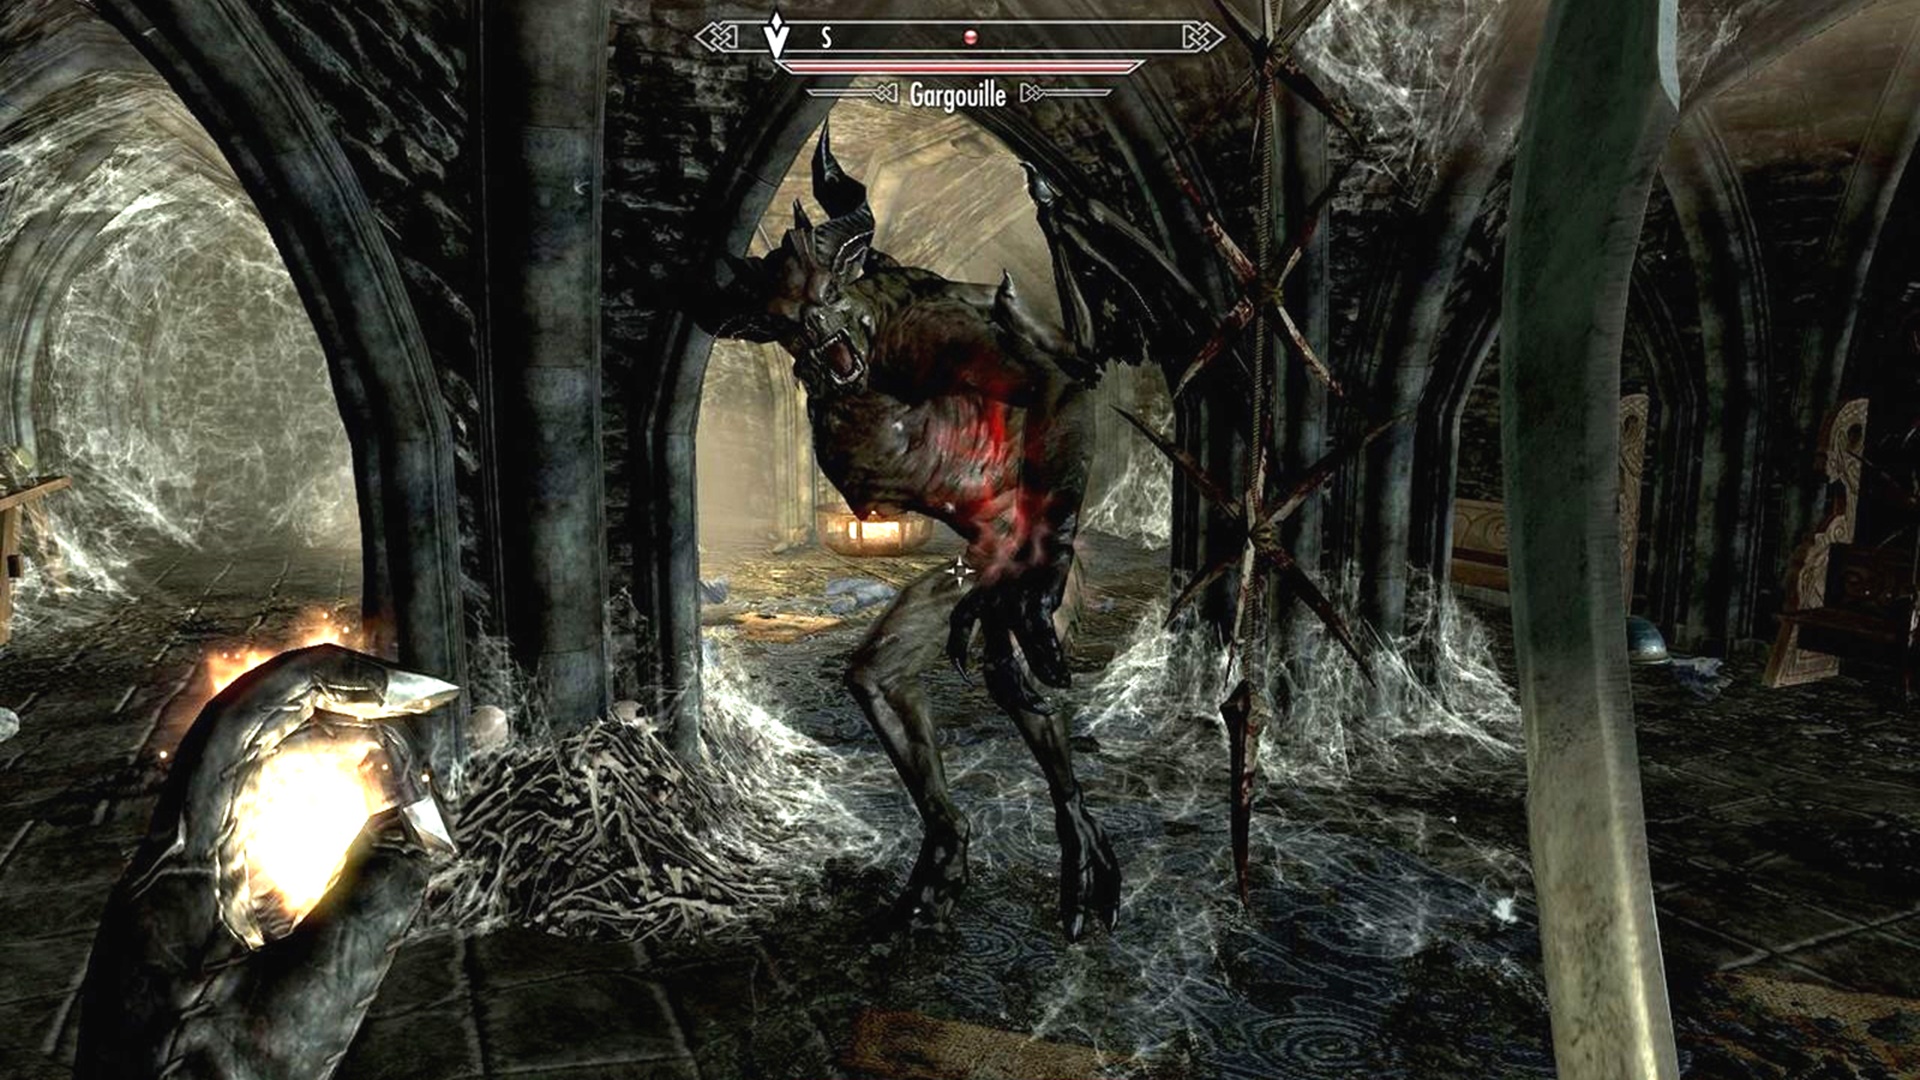 Fighting a Gargouille in one of the best Vampire games, Skyrim